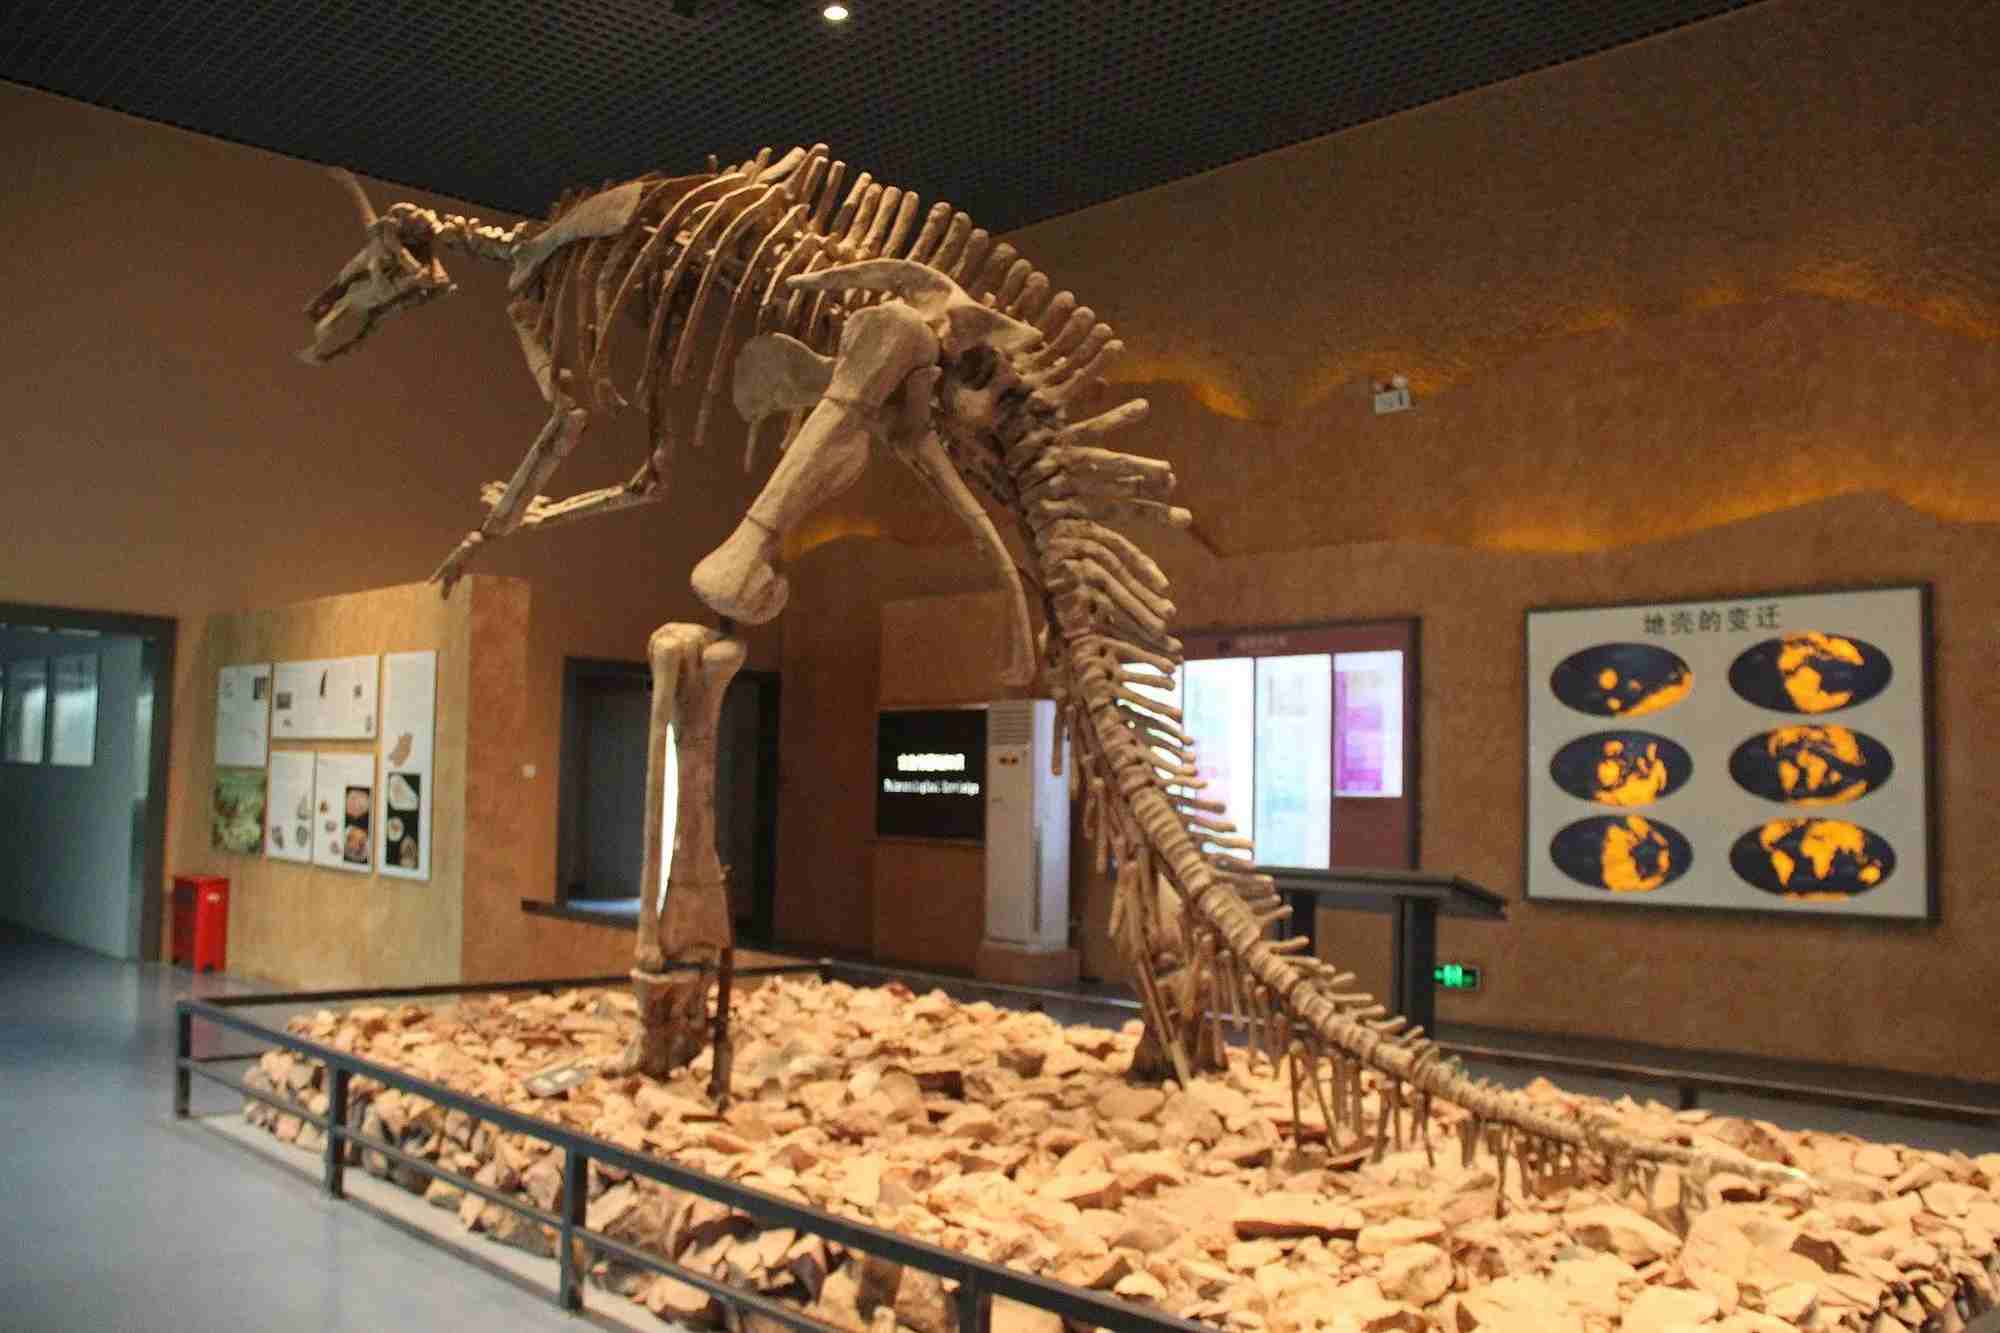 Learn all about size and habitat of the Tsintaosaurus dinosaur.